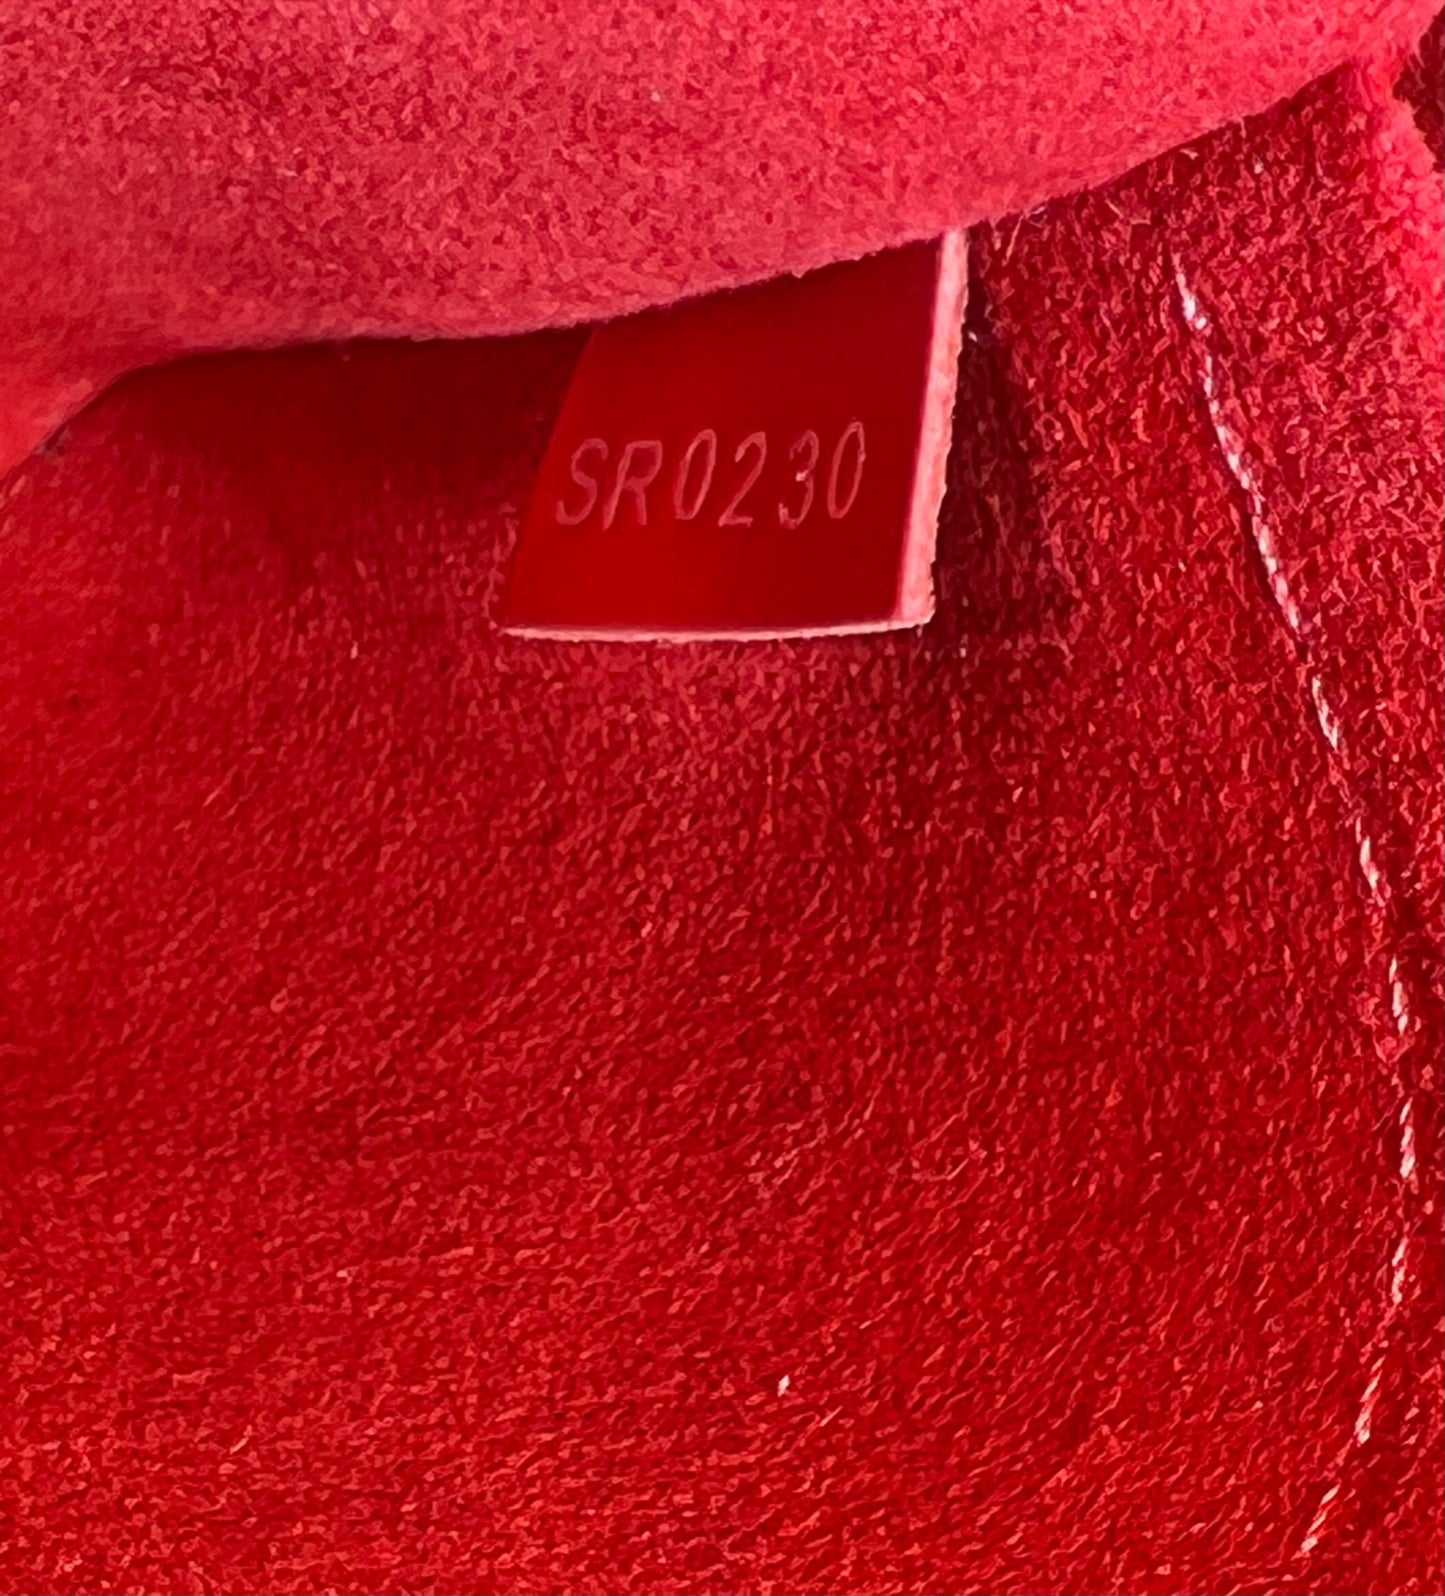 Louis Vuitton messenger Epi Noir Neo Monceau Hand Shoulder 2 Way Bag P –  Debsluxurycloset